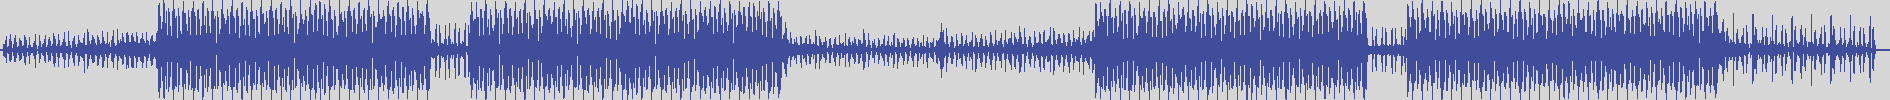 nf_boyz_records [NFY072] Lunar 5 - Usedom [Worldwide Mix] audio wave form